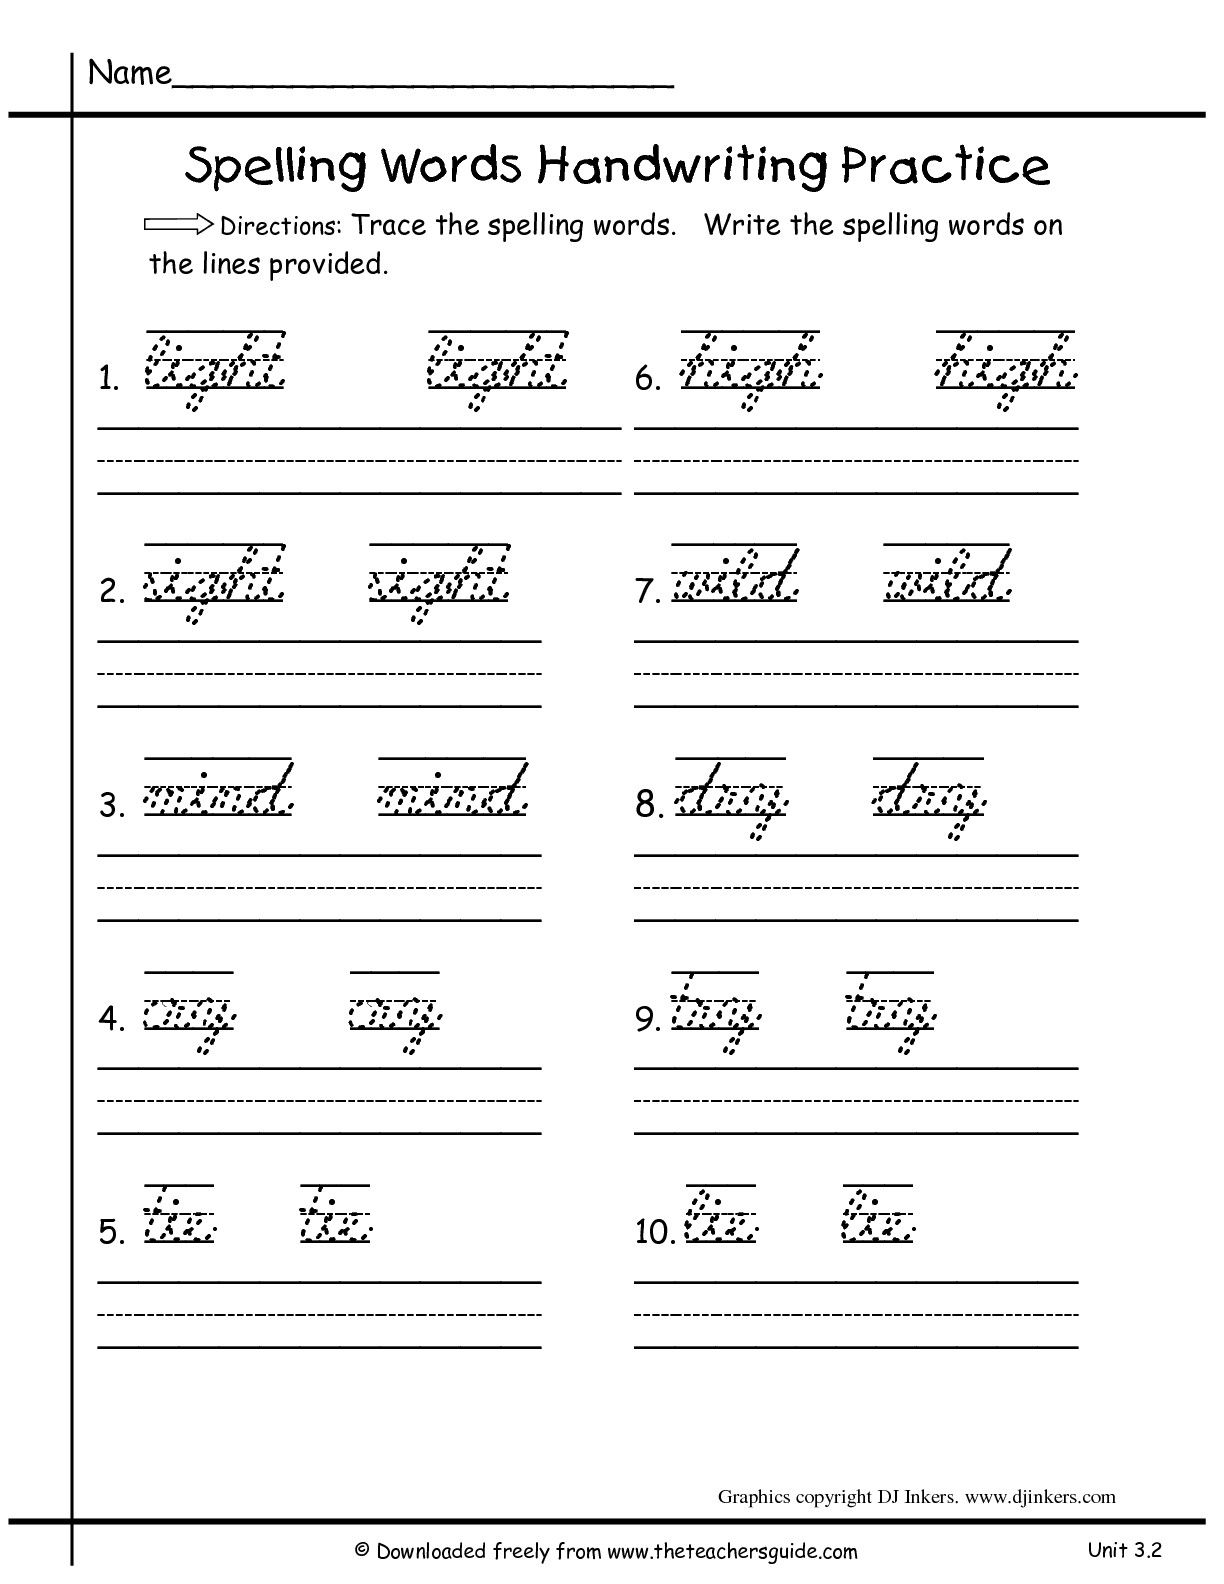 17 Best Images of Spelling Worksheets 2nd Grade Sight ...